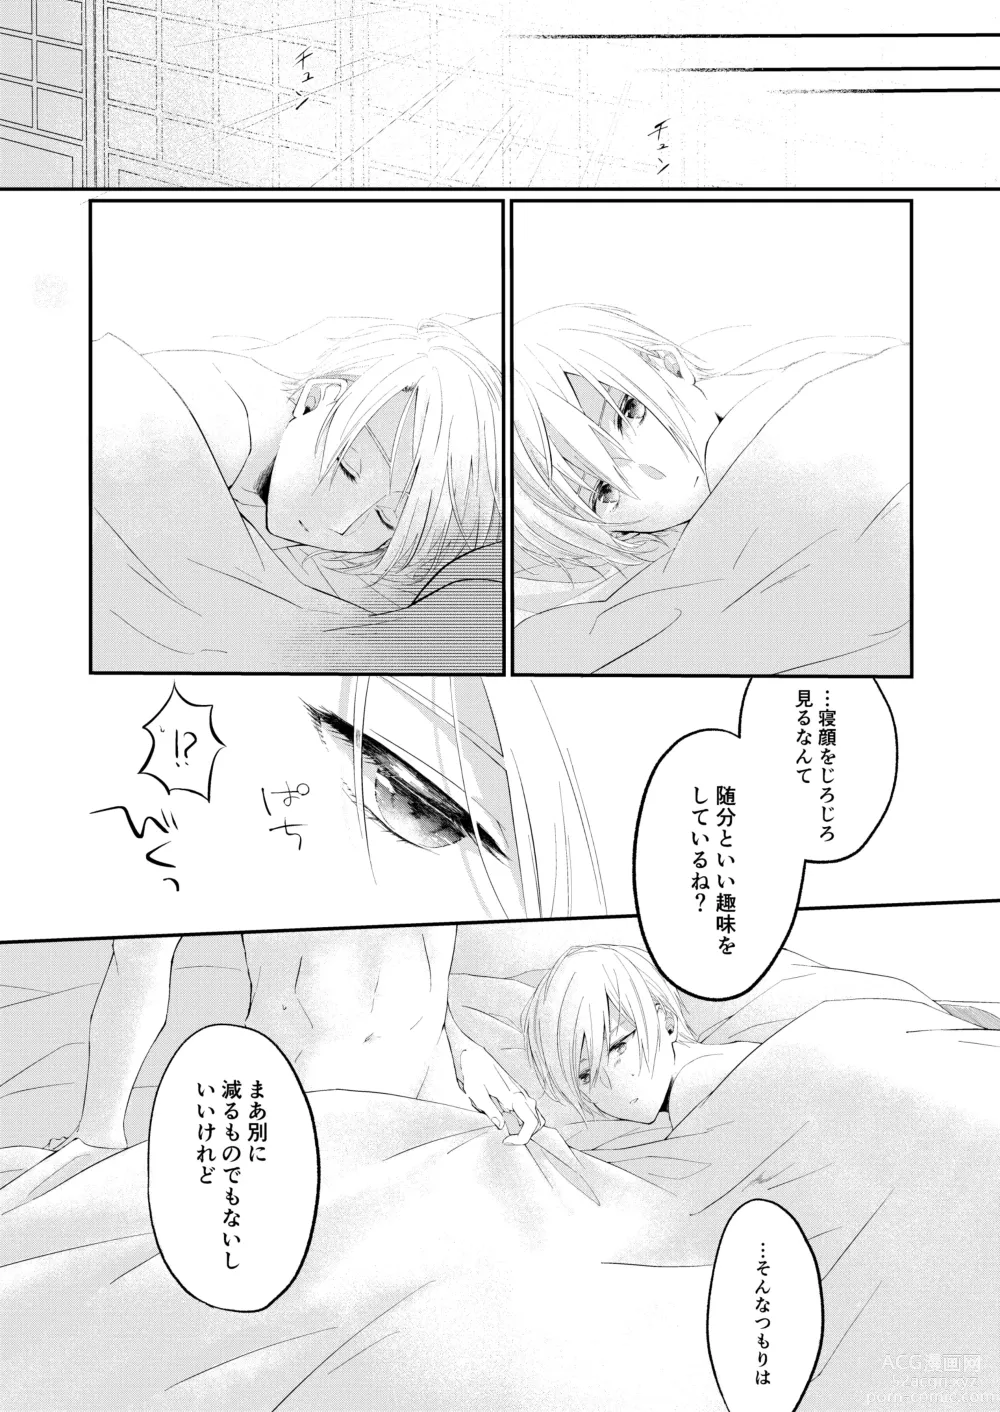 Page 46 of doujinshi Jiko Manzoku no ×××